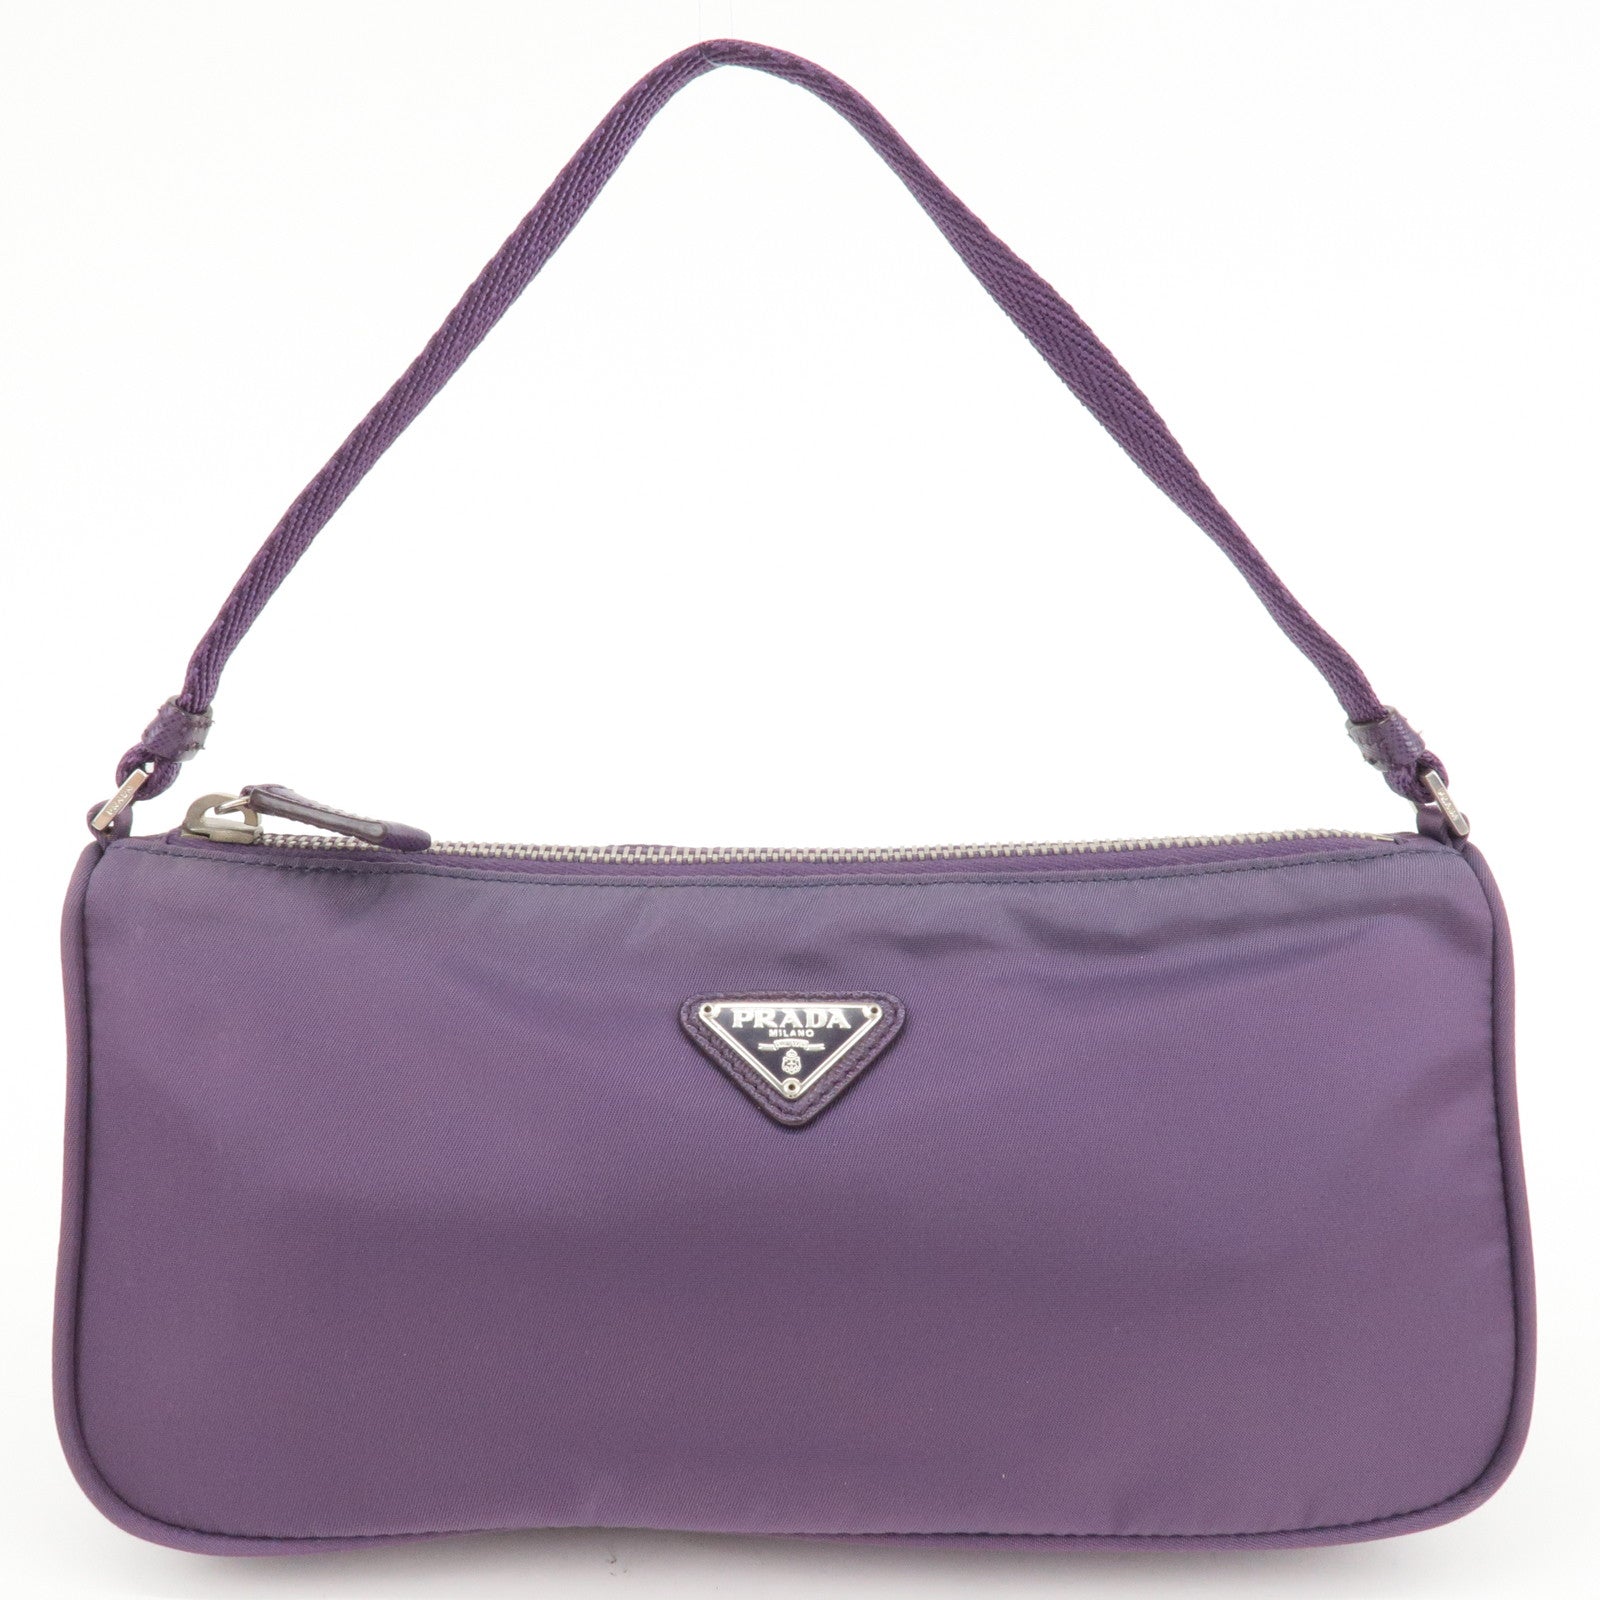 Beauty Box - 100% Authentic Prada Nylon 2 Way Bag